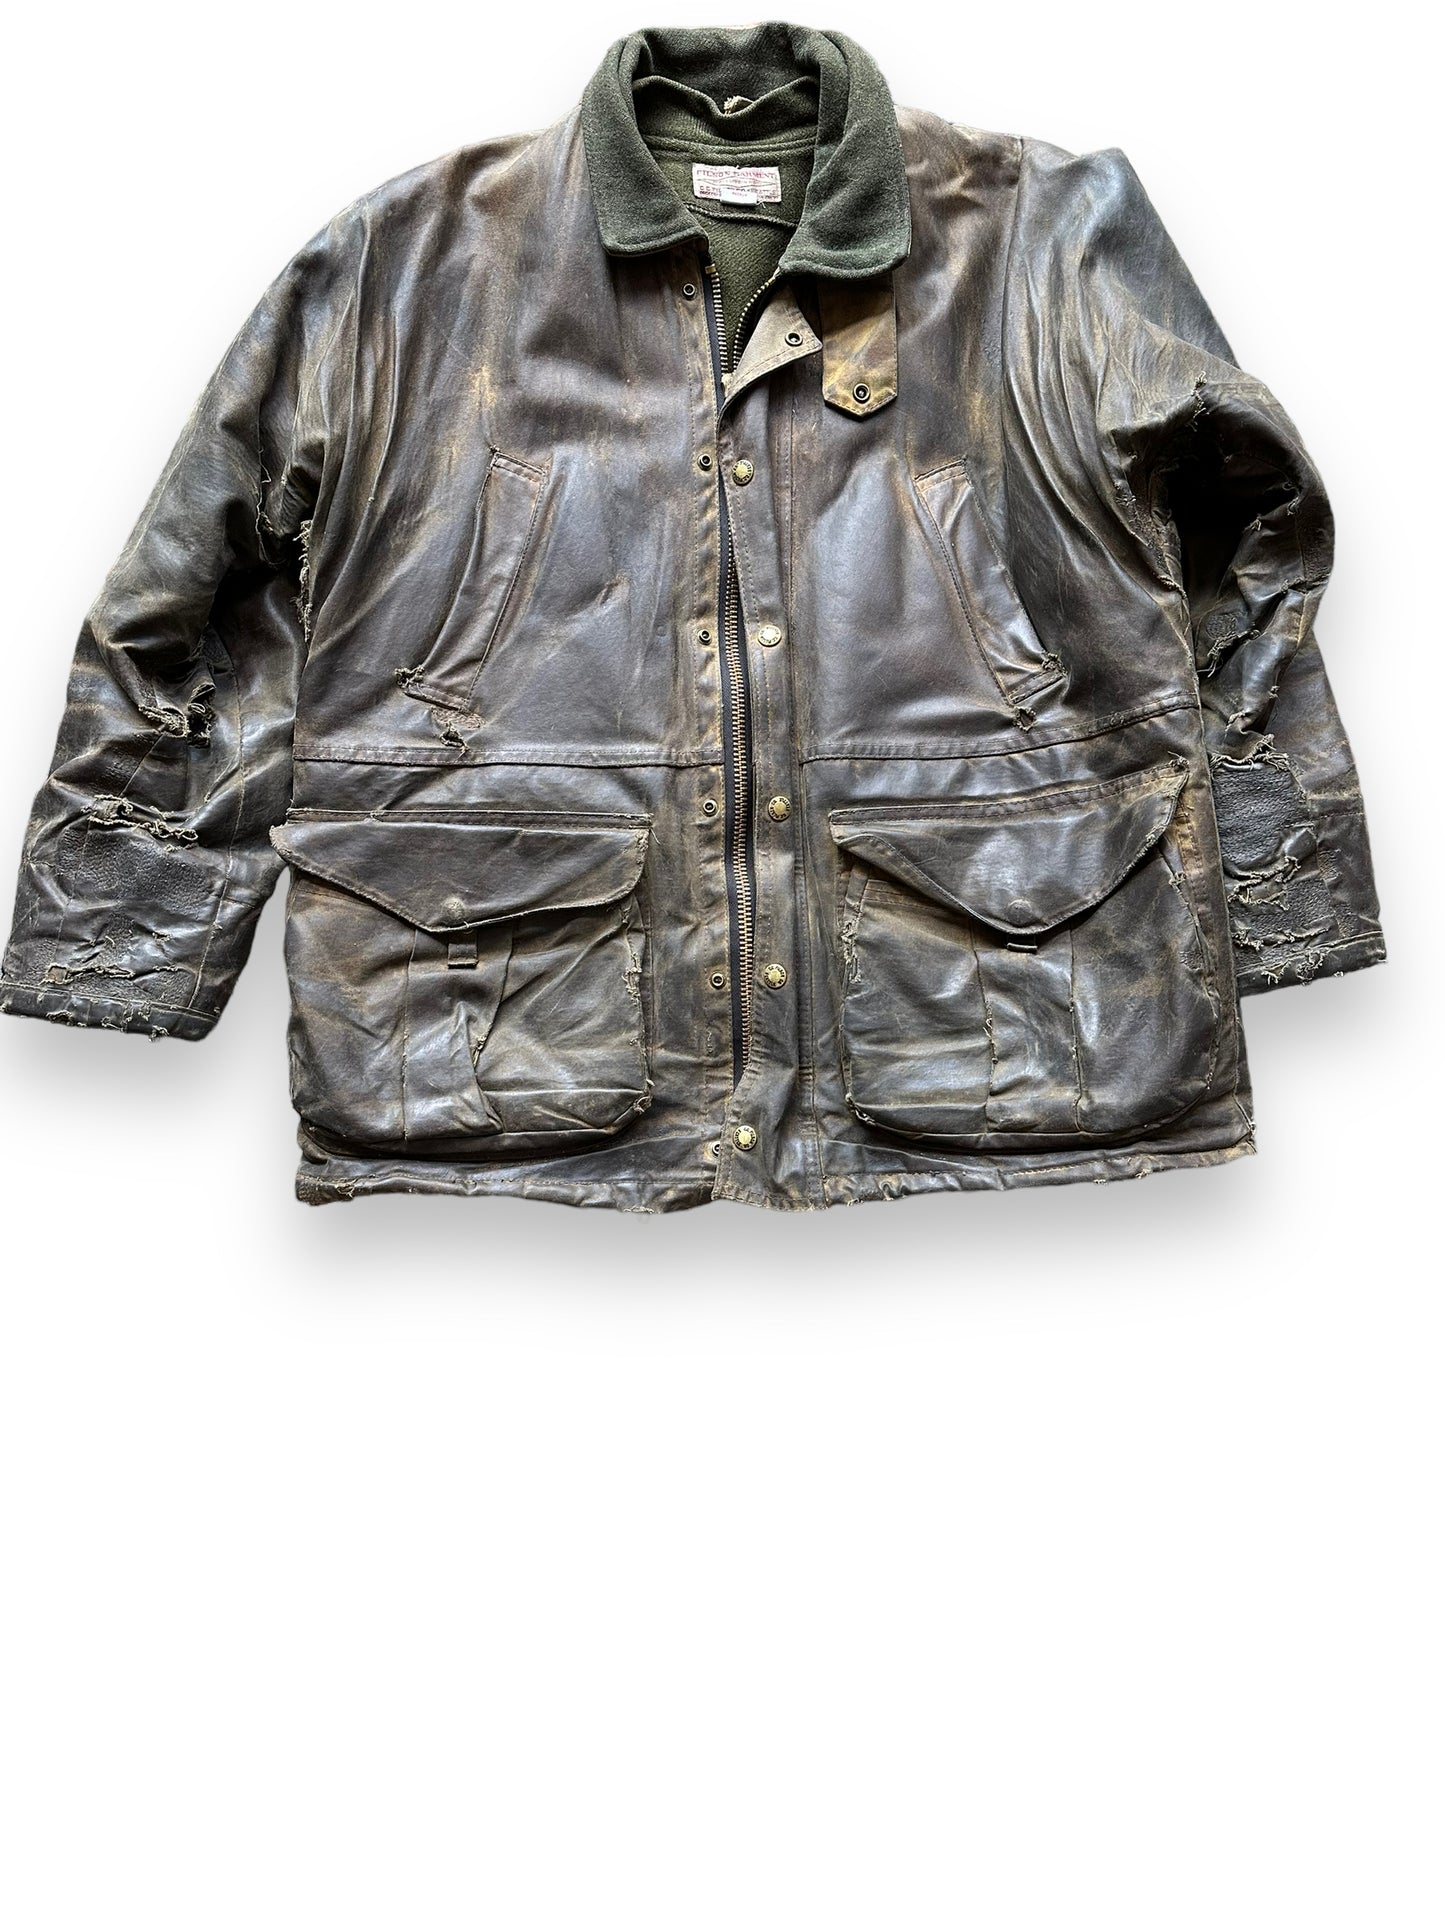 Front View of Filson Nasty Boy Tin Cloth Field Jacket SZ 42 |  Filson Tin Cloth Jacket | Vintage Workwear Seattle